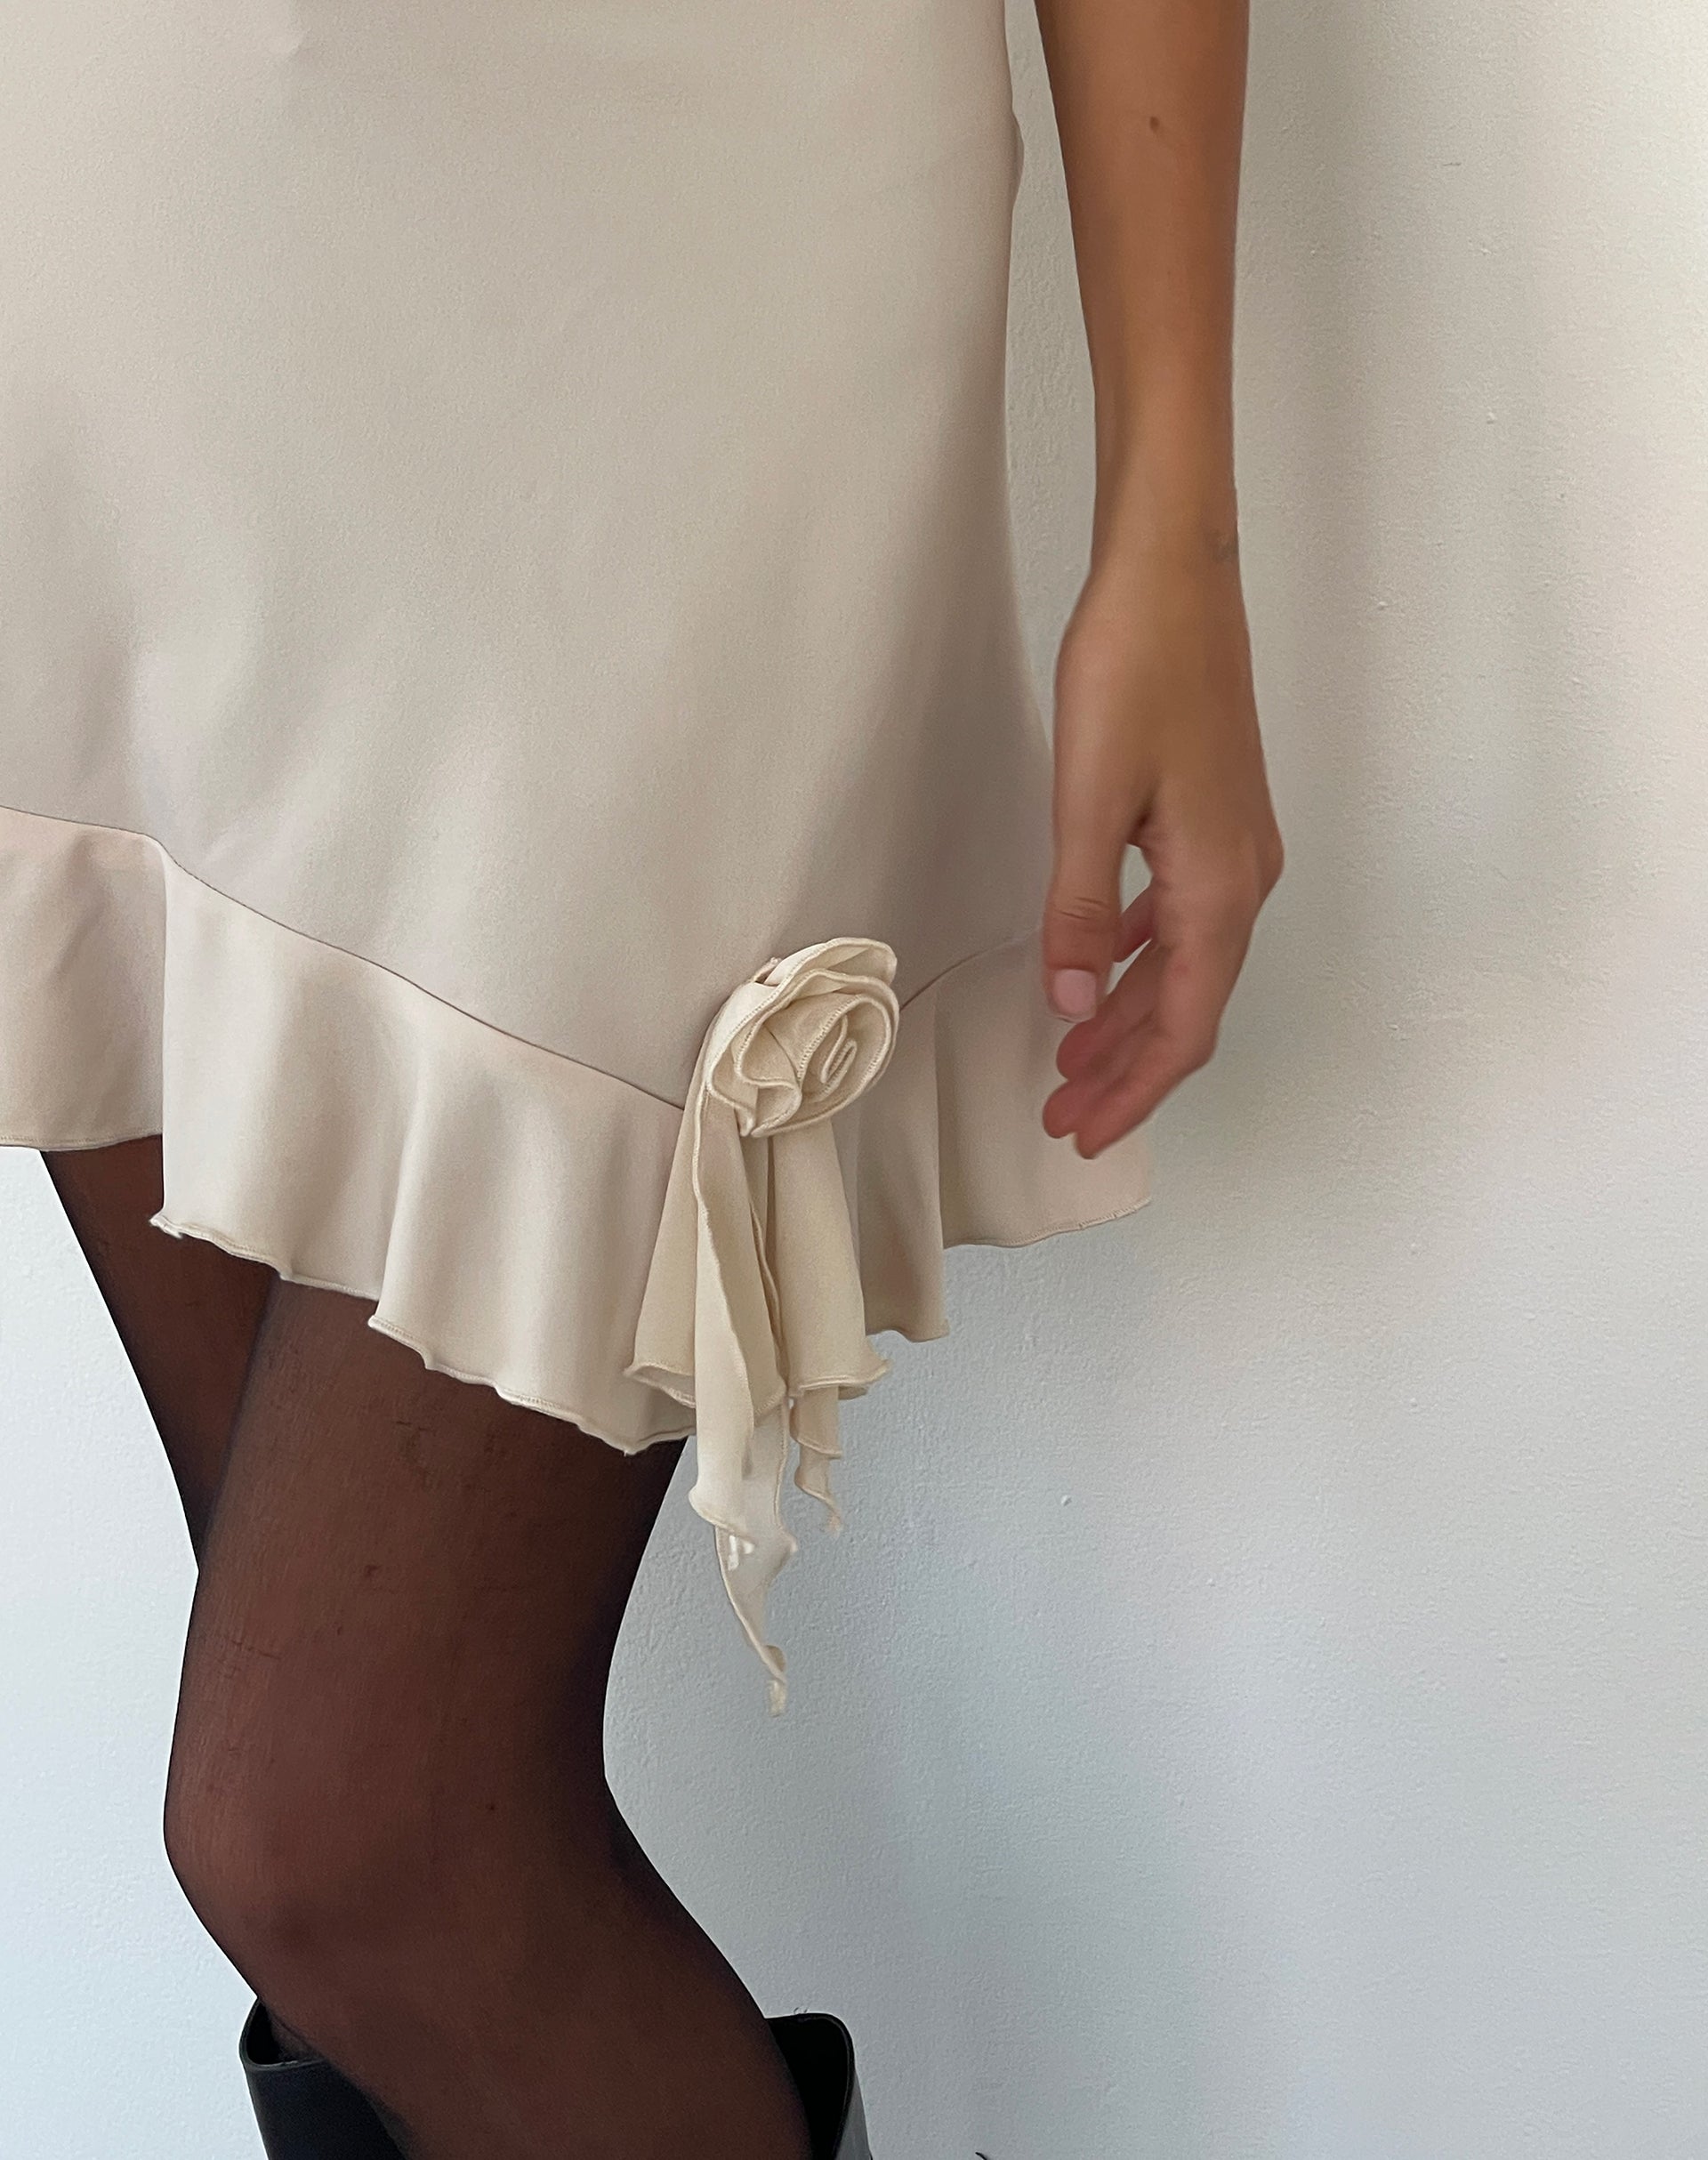 Image of Litera Ruffle Rosette Mini Dress in Cream